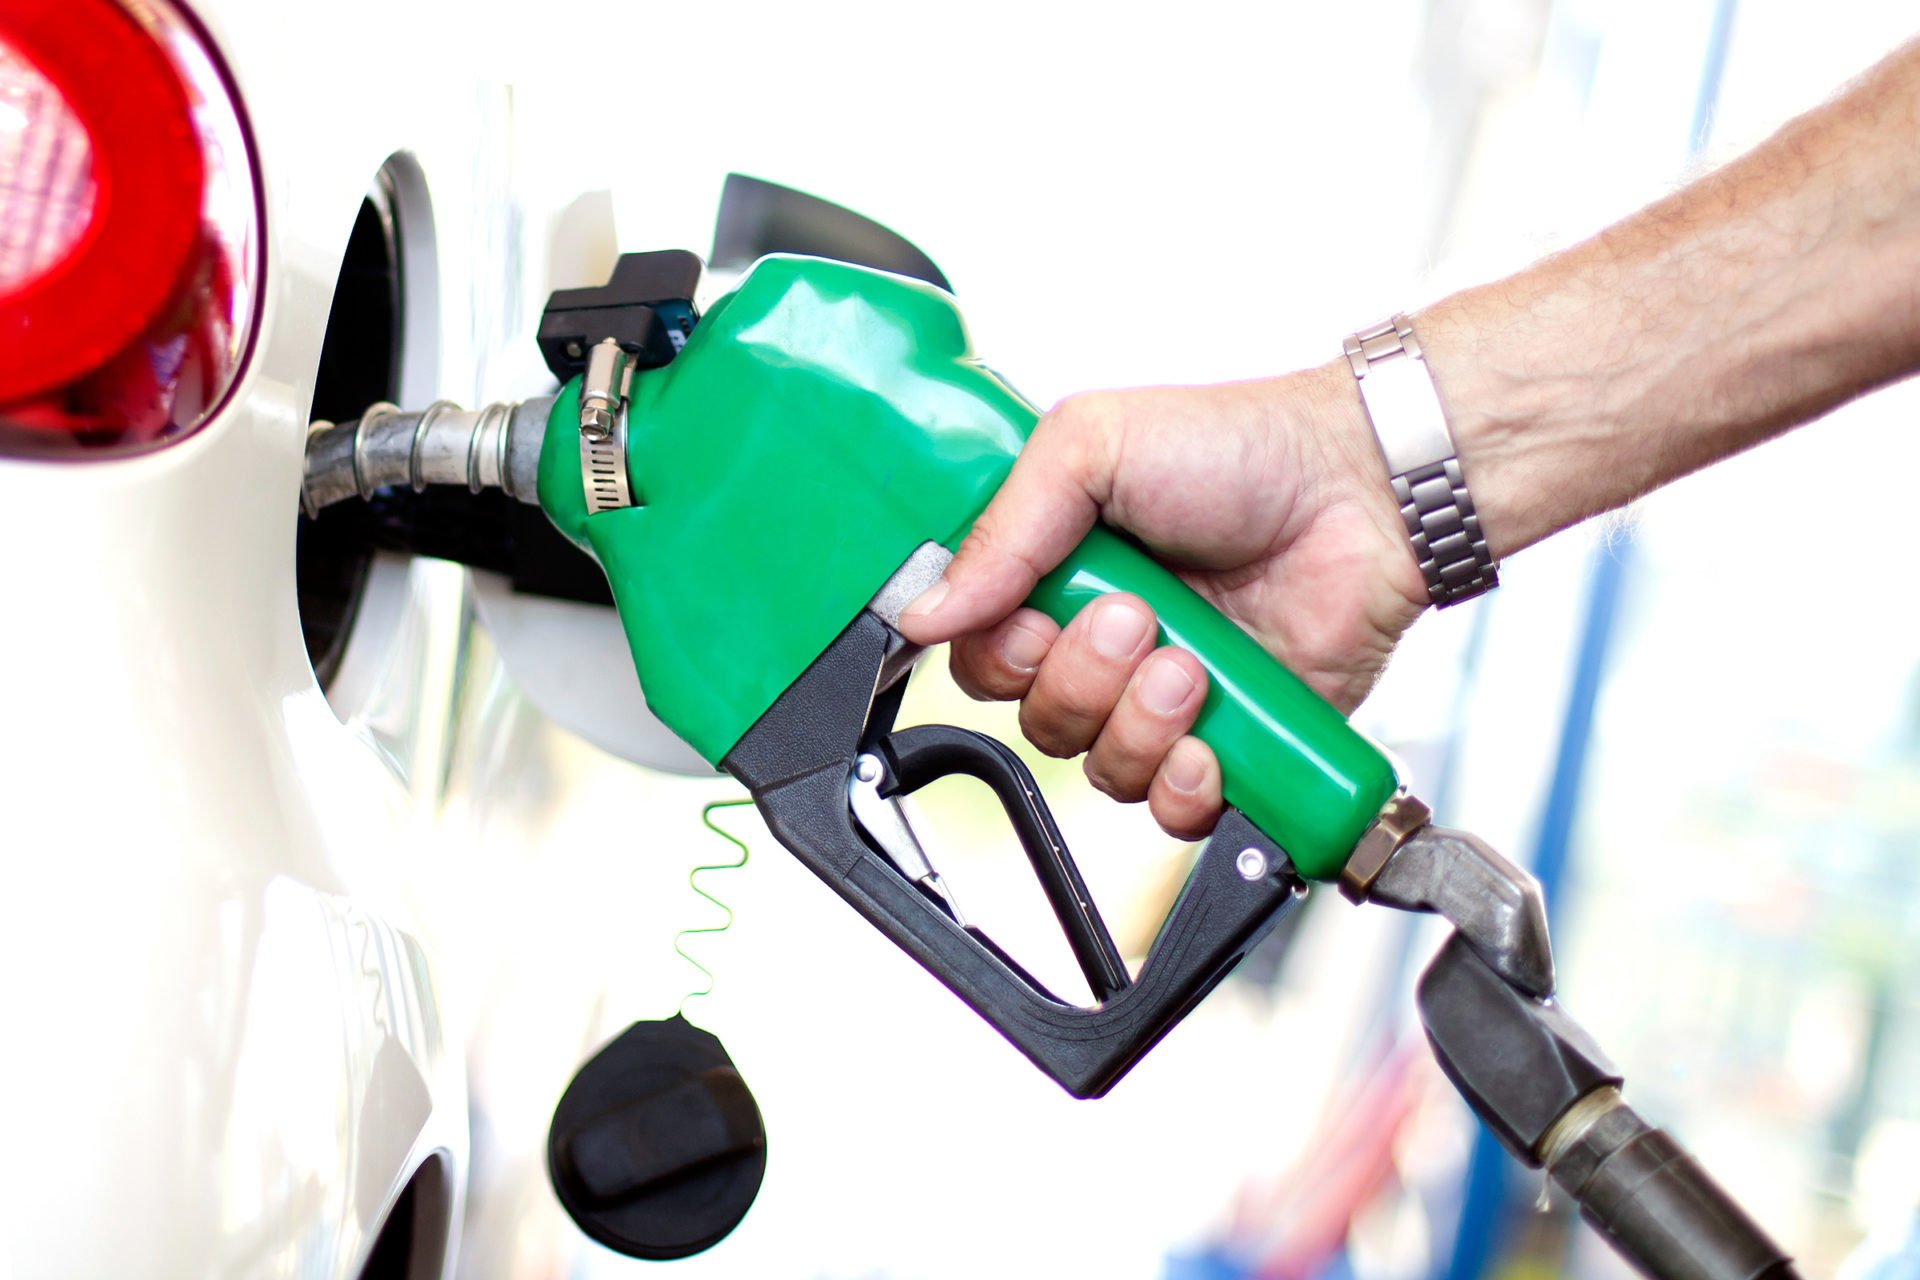 Fuel Prices To Go Up - COPEC Predicts